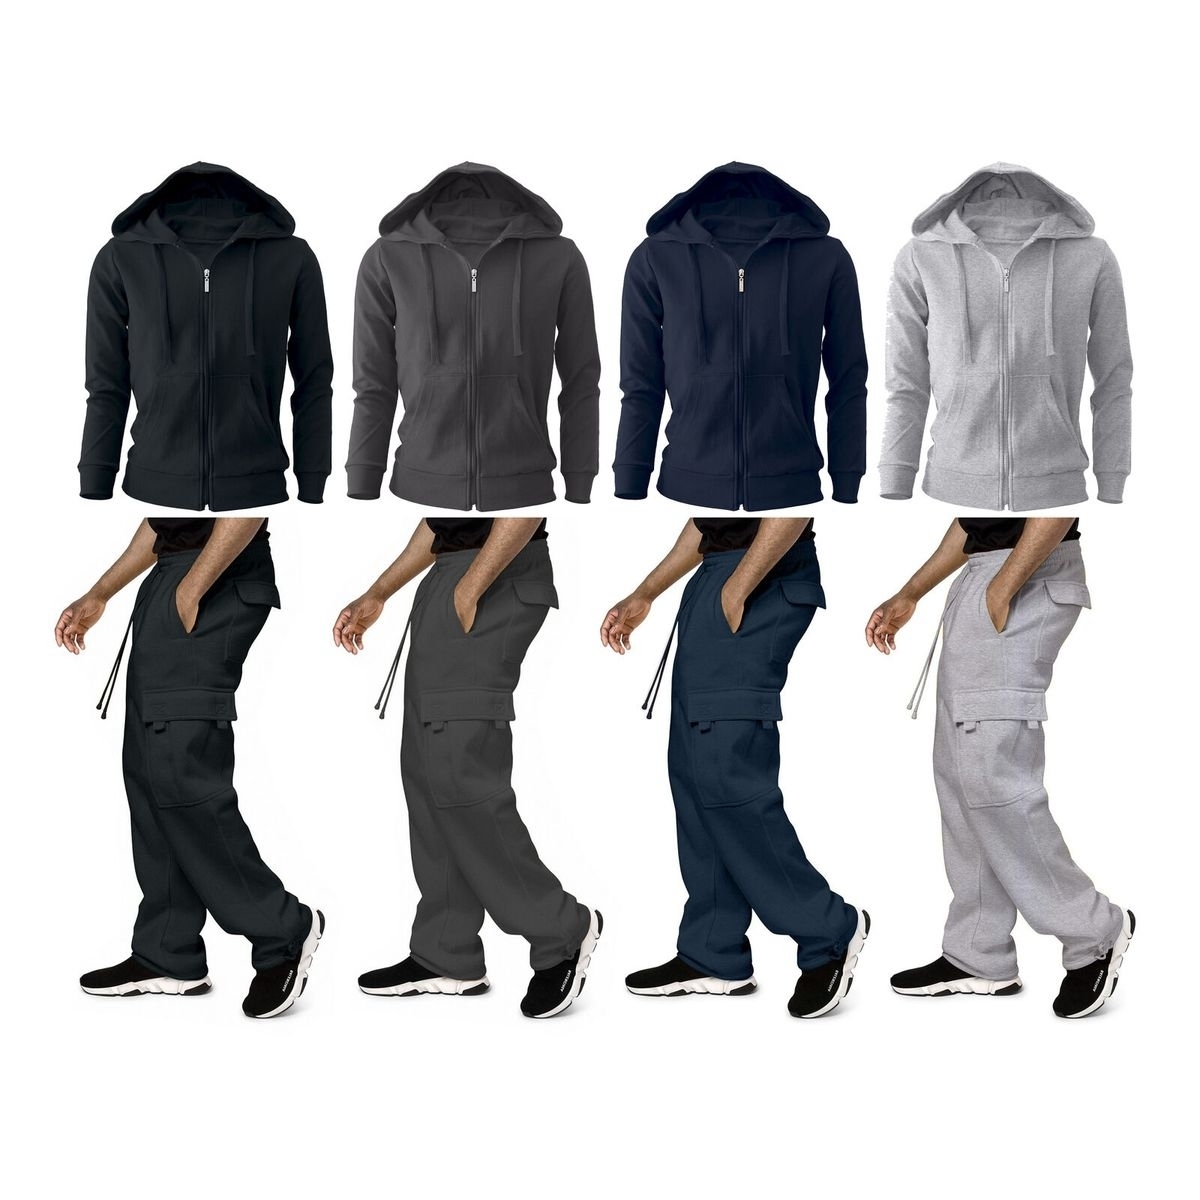 2-Pack: Men's Big & Tall Winter Warm Athletic Active Cozy Fleece Lined Multi-Pocket Full Zip Up Cargo Tracksuit - Grey, Medium